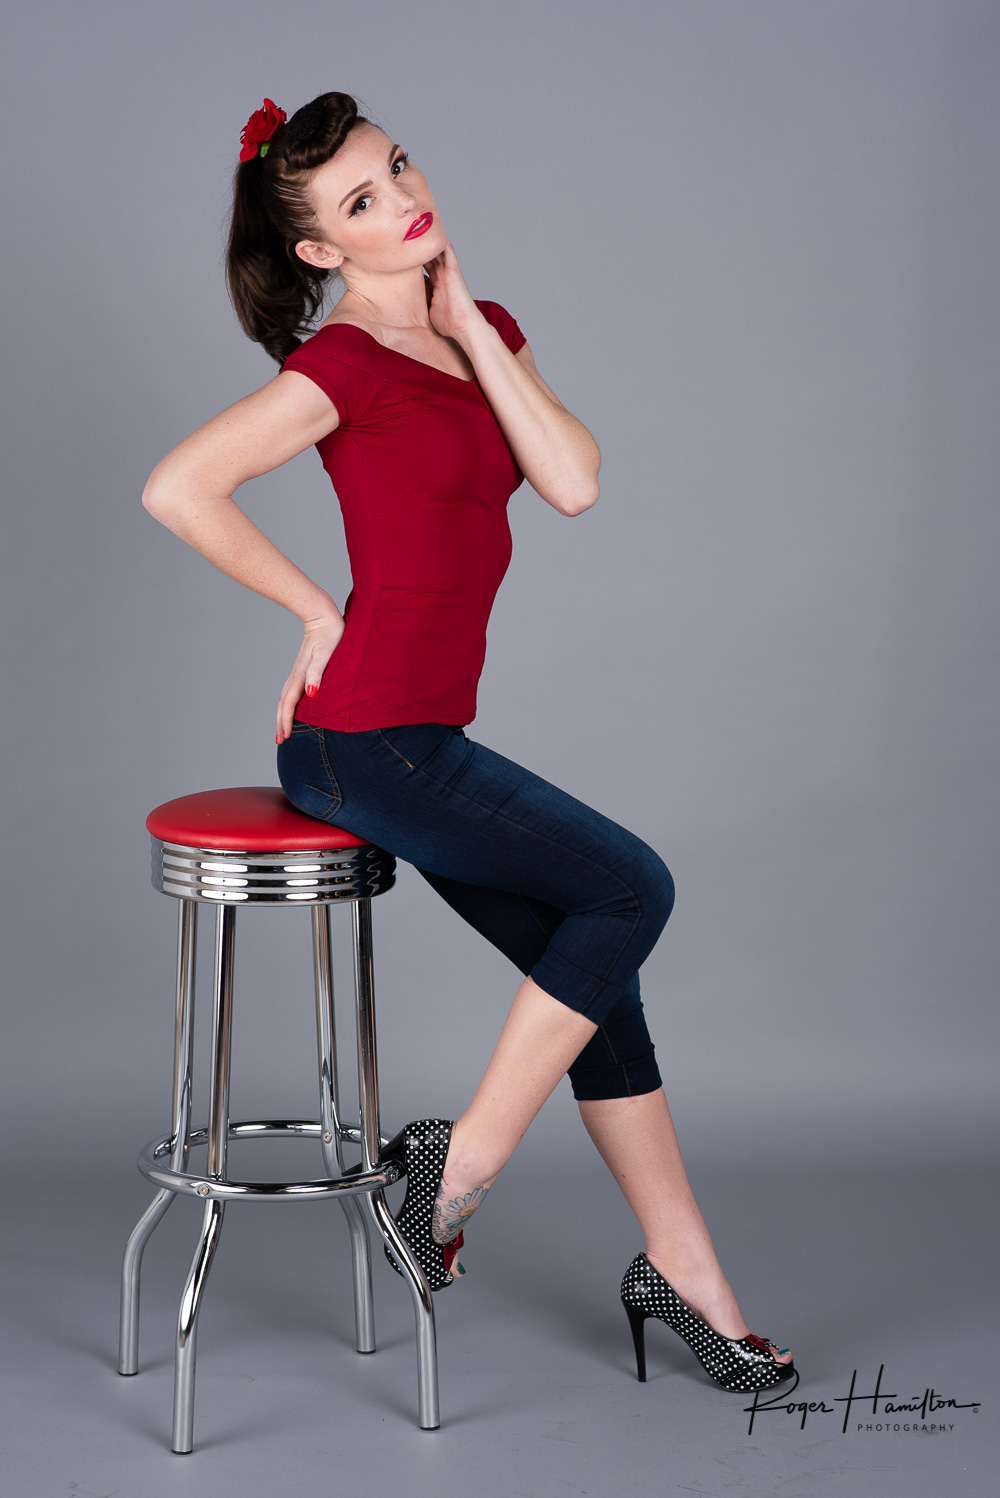 Calysta posing on a 50s inspired bar stool